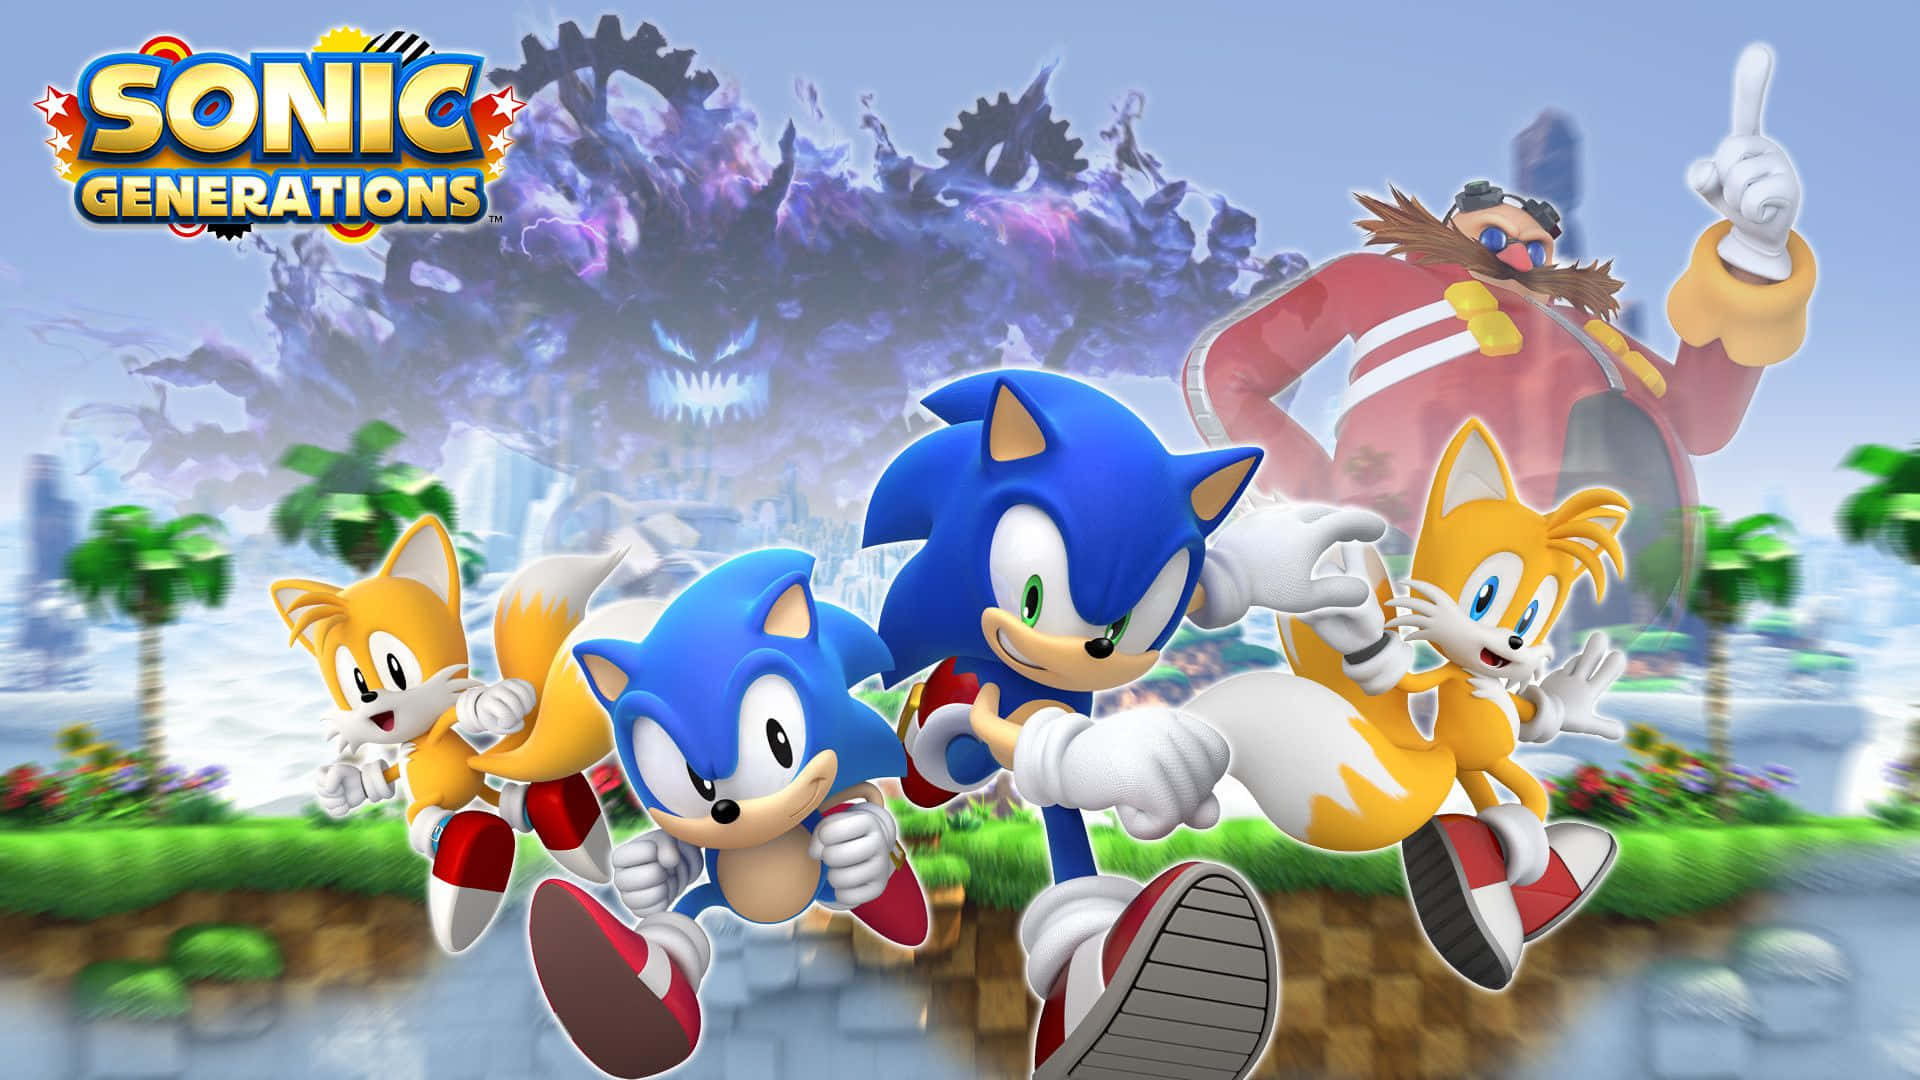 Sonic The Hedgehog is Back in 4K Wallpaper